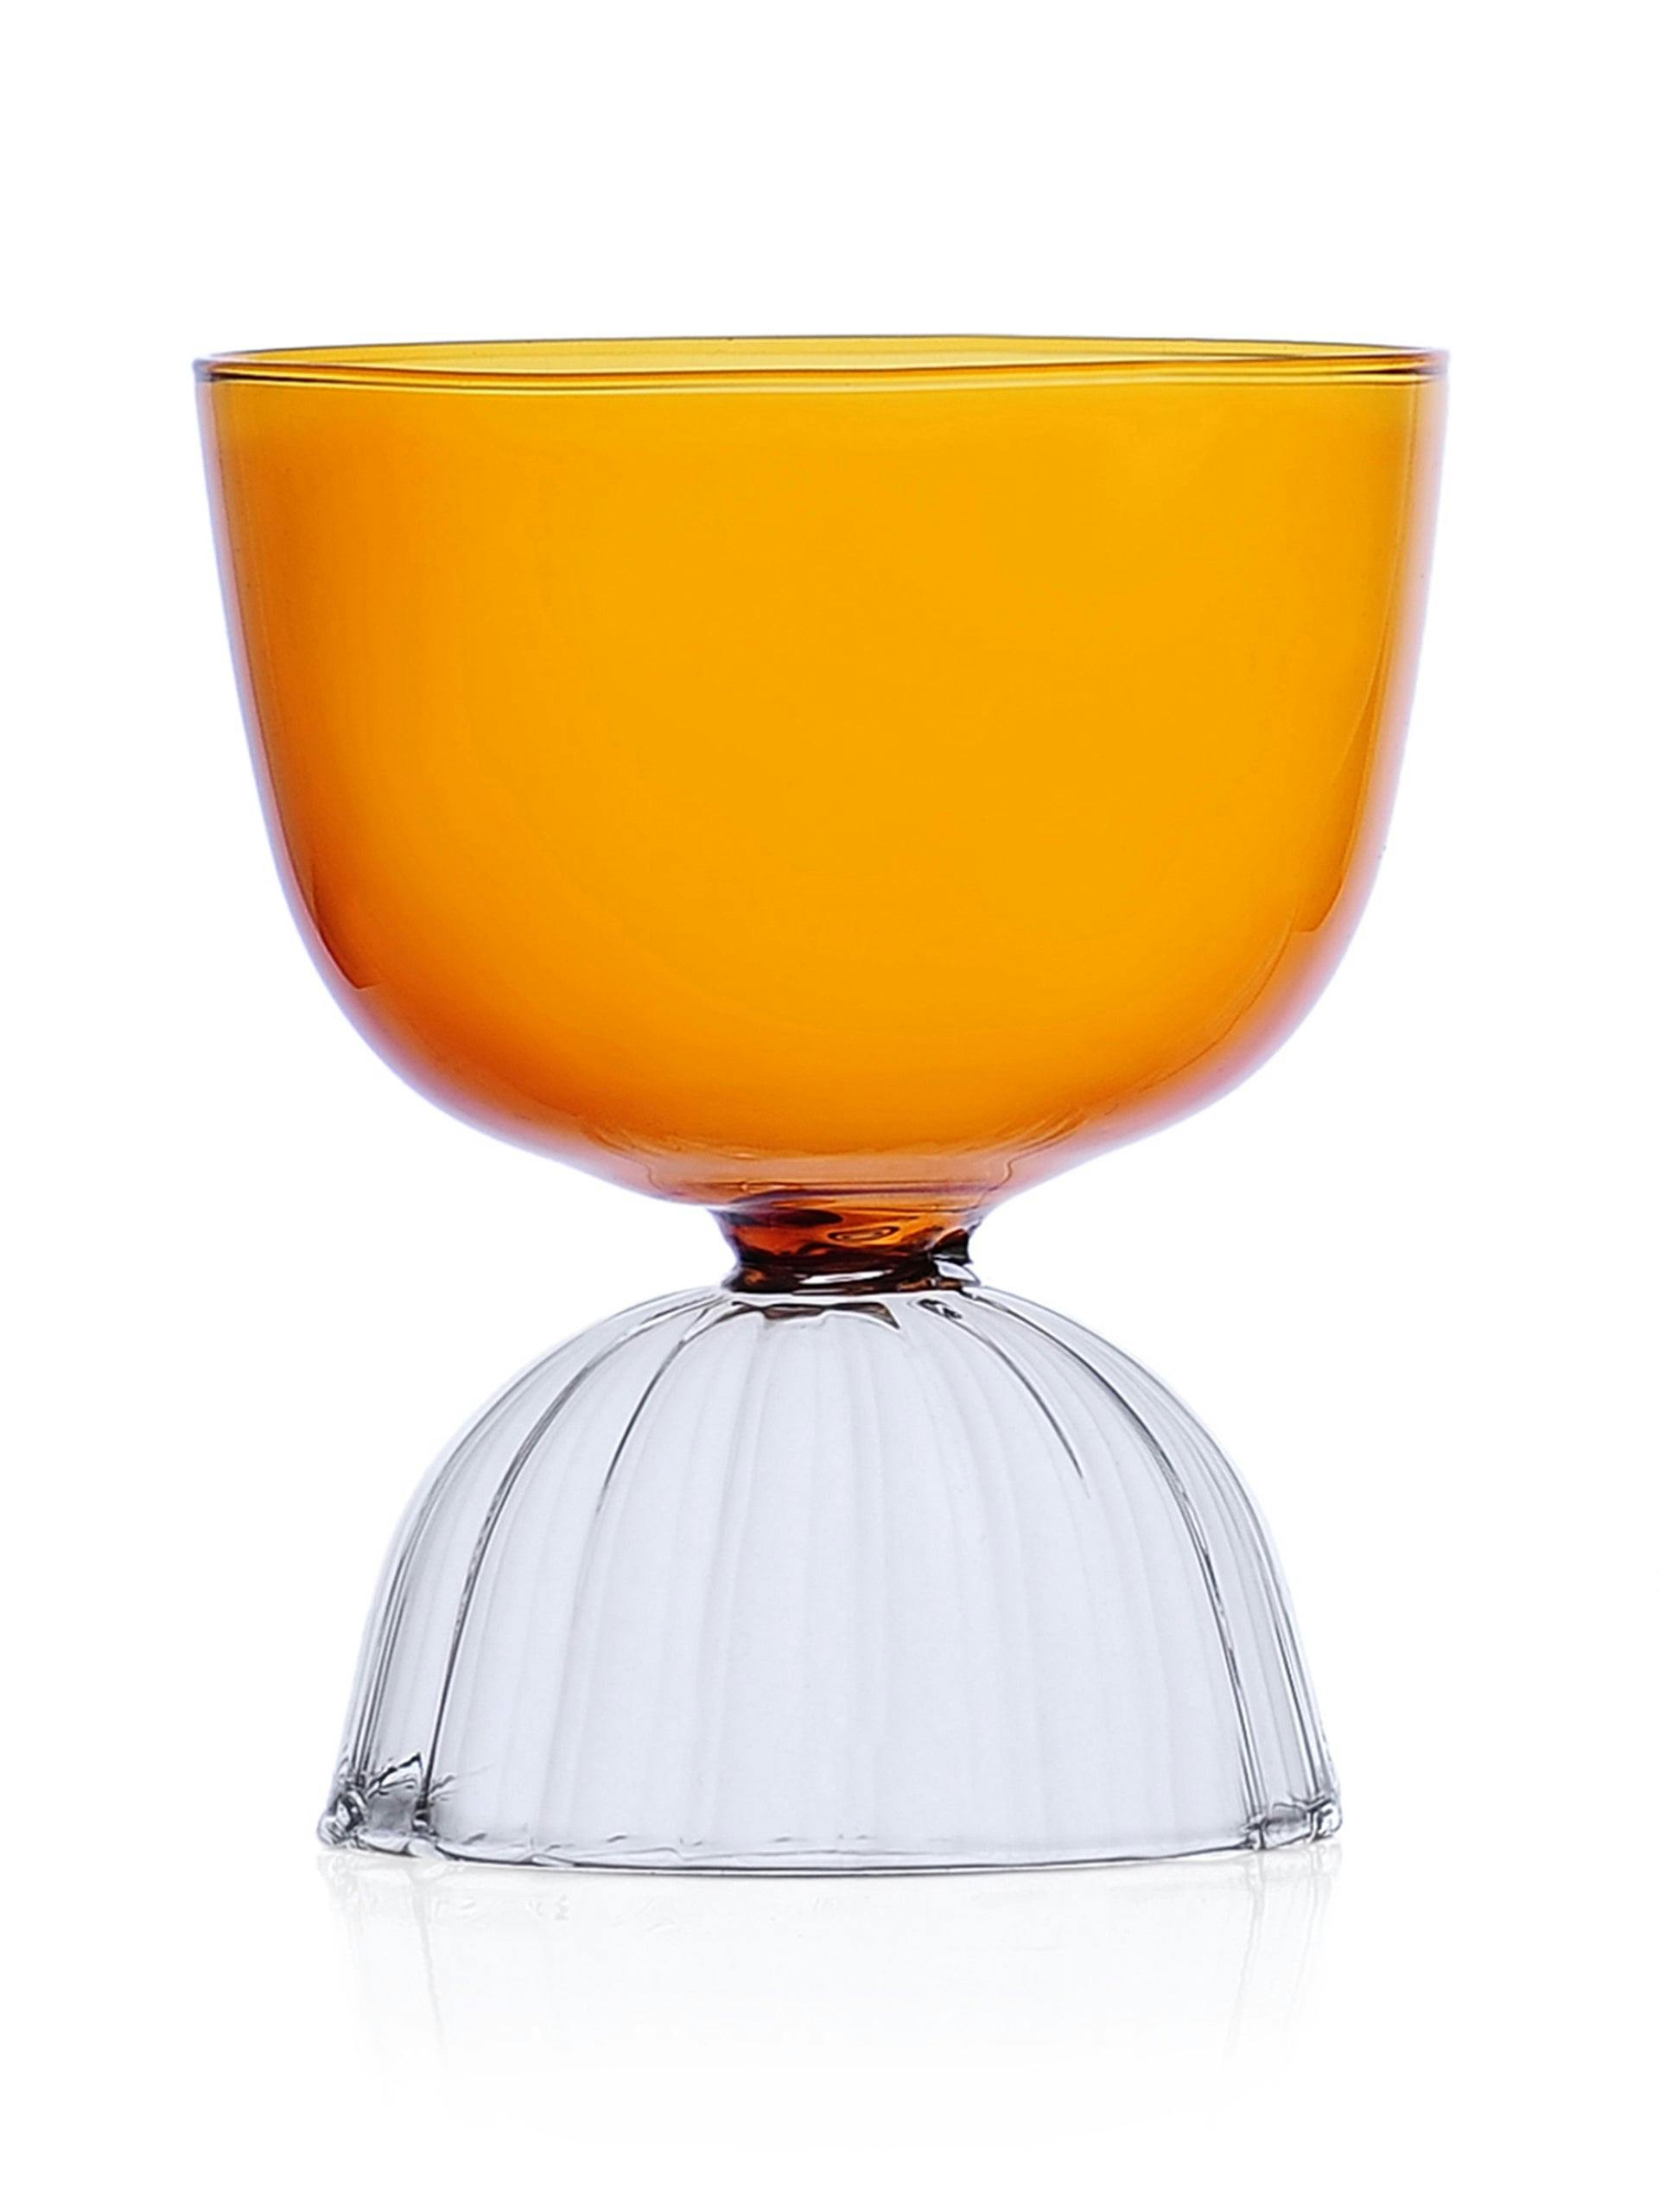 Orange water glass